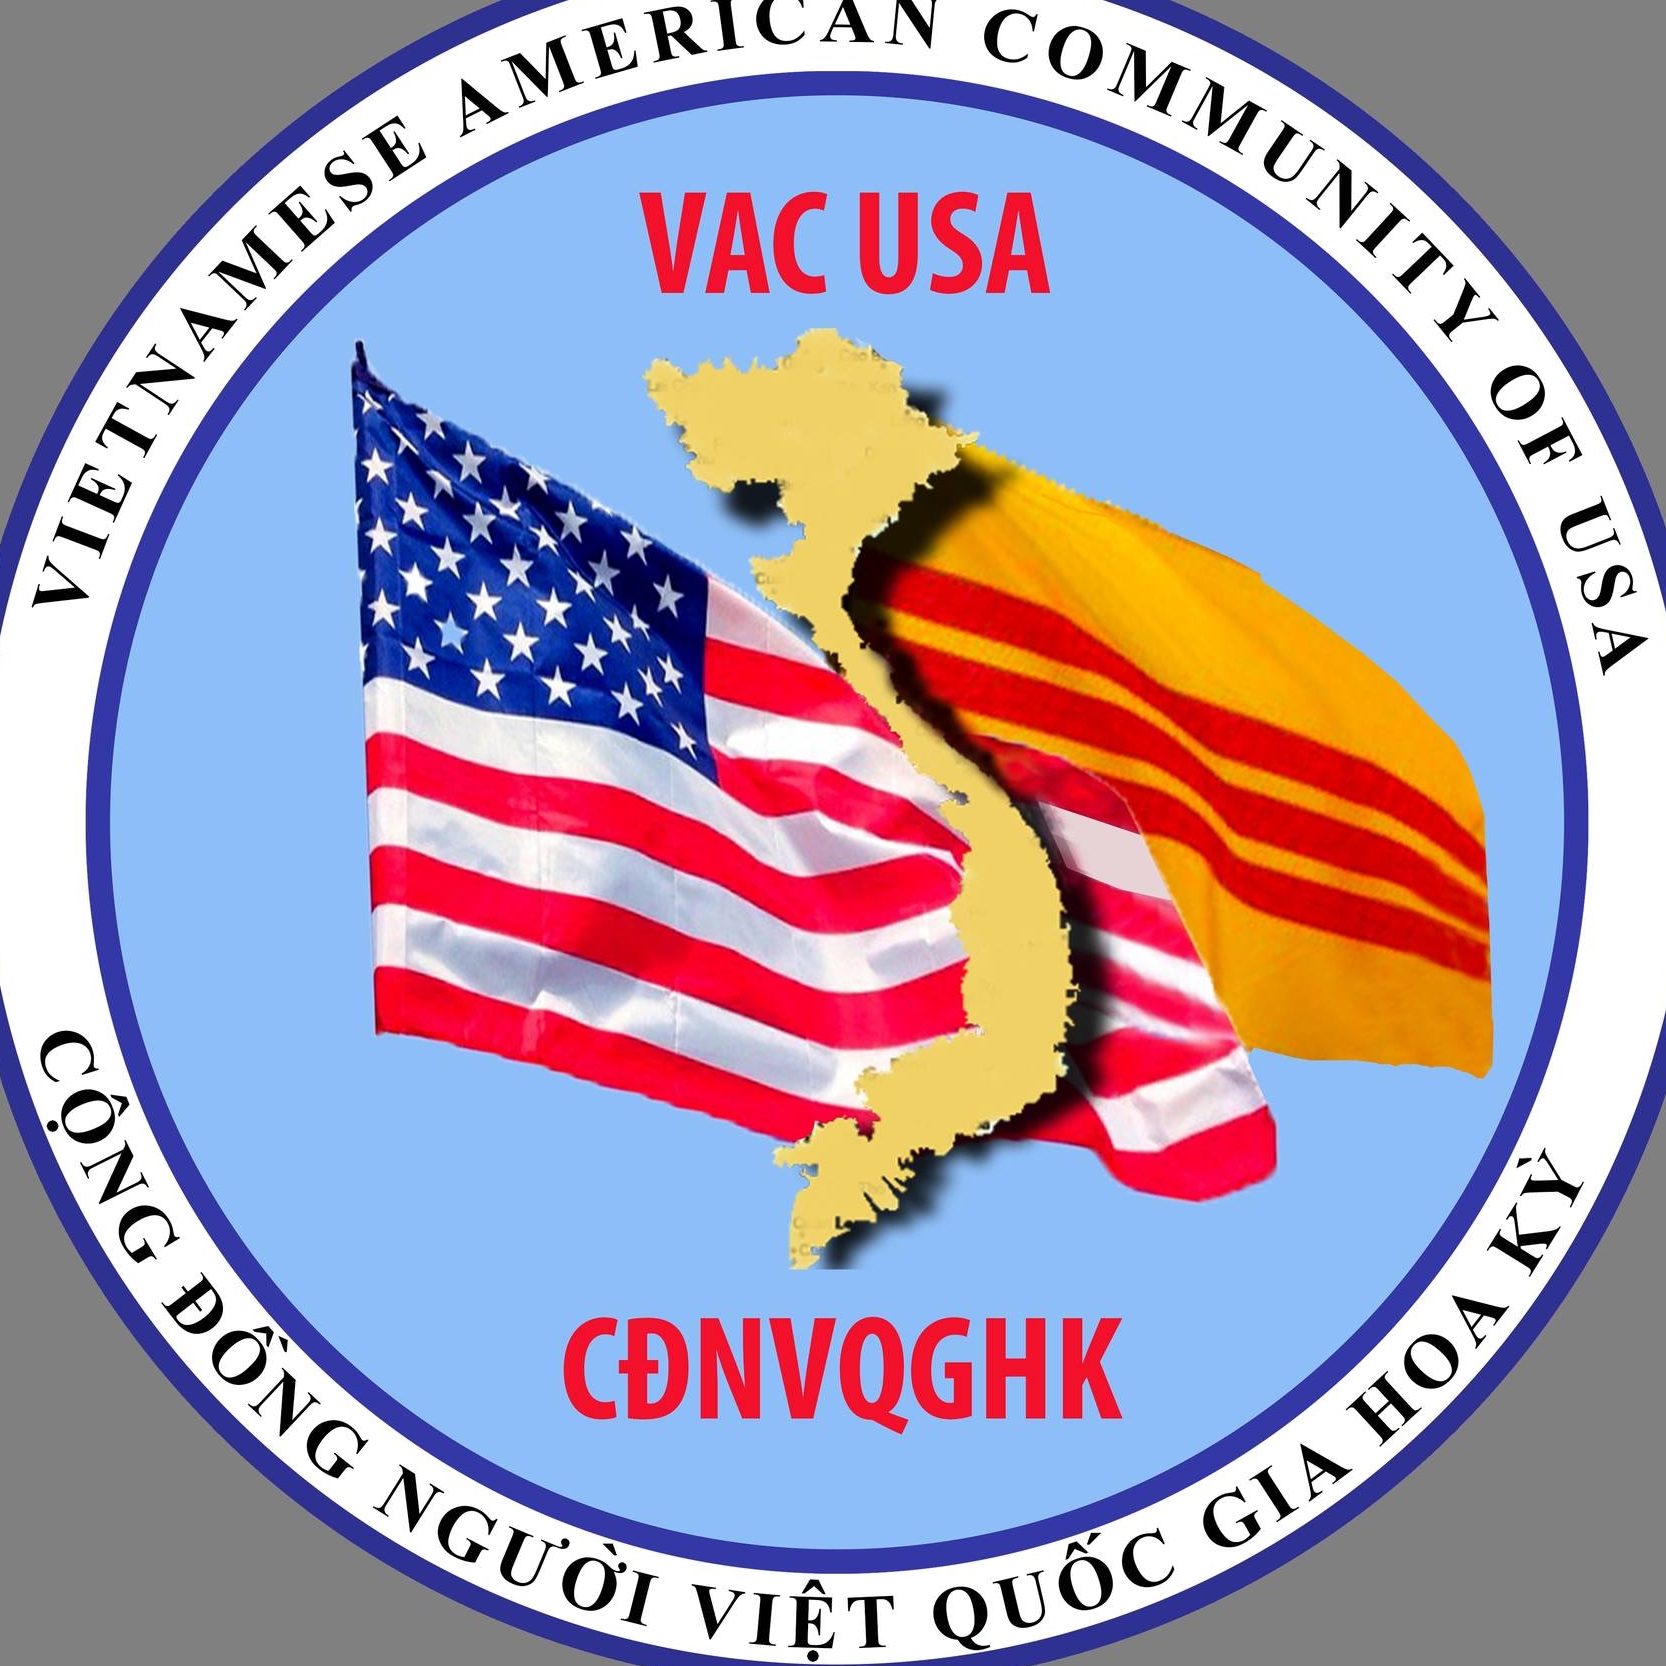 Vietnamese Organizations Near Me - Vietnamese American Community of the USA